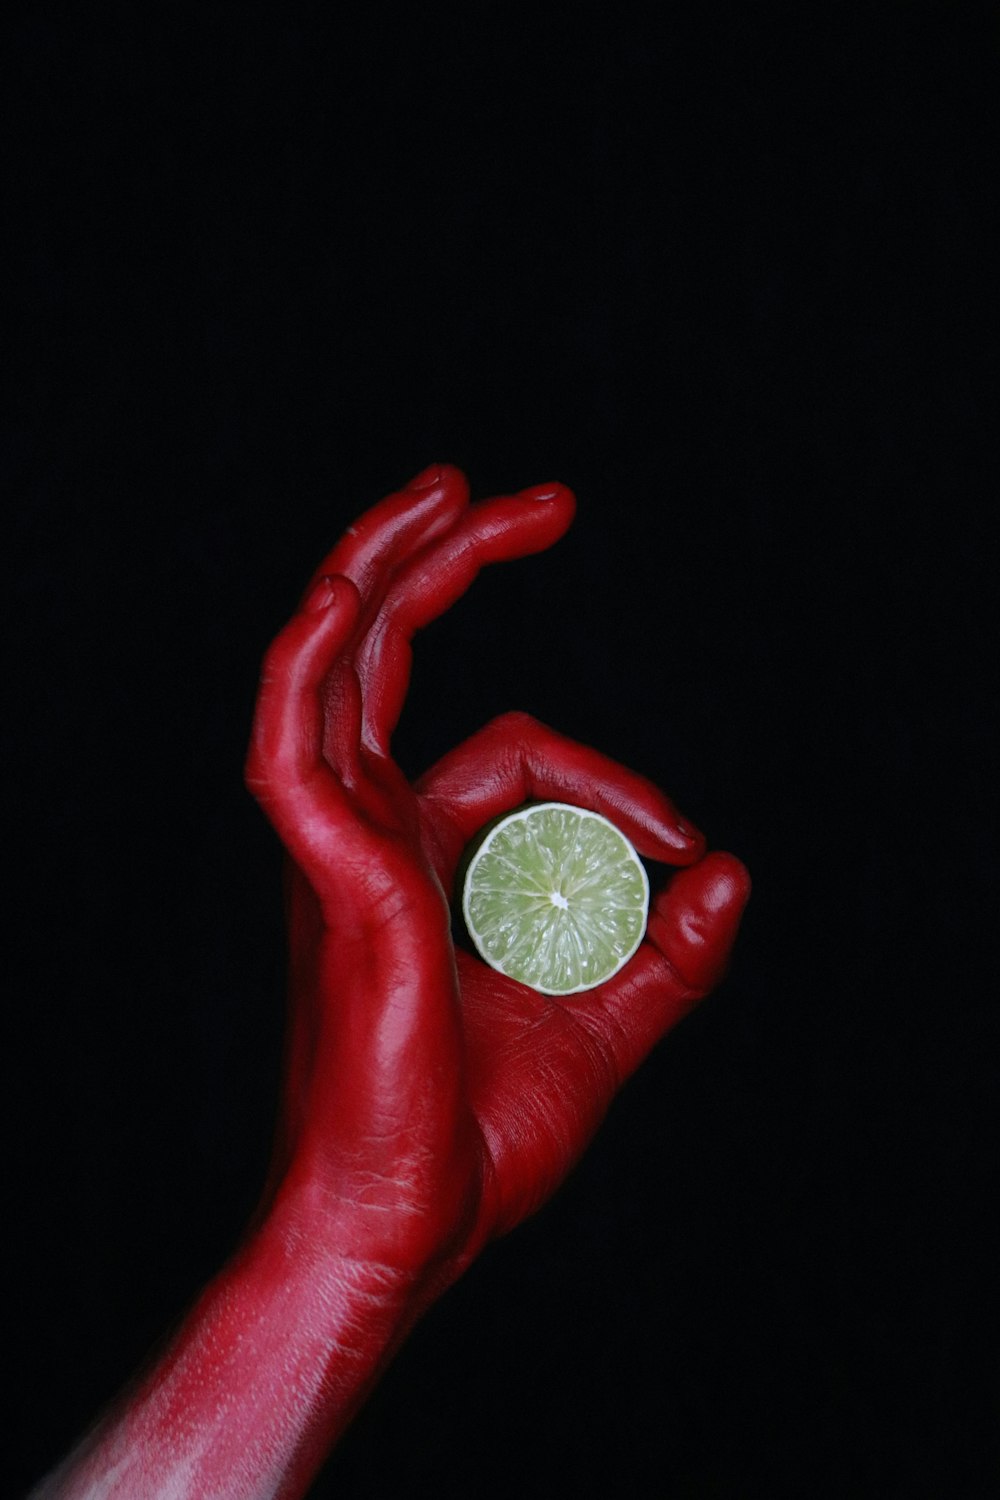 red bell pepper with green lemon